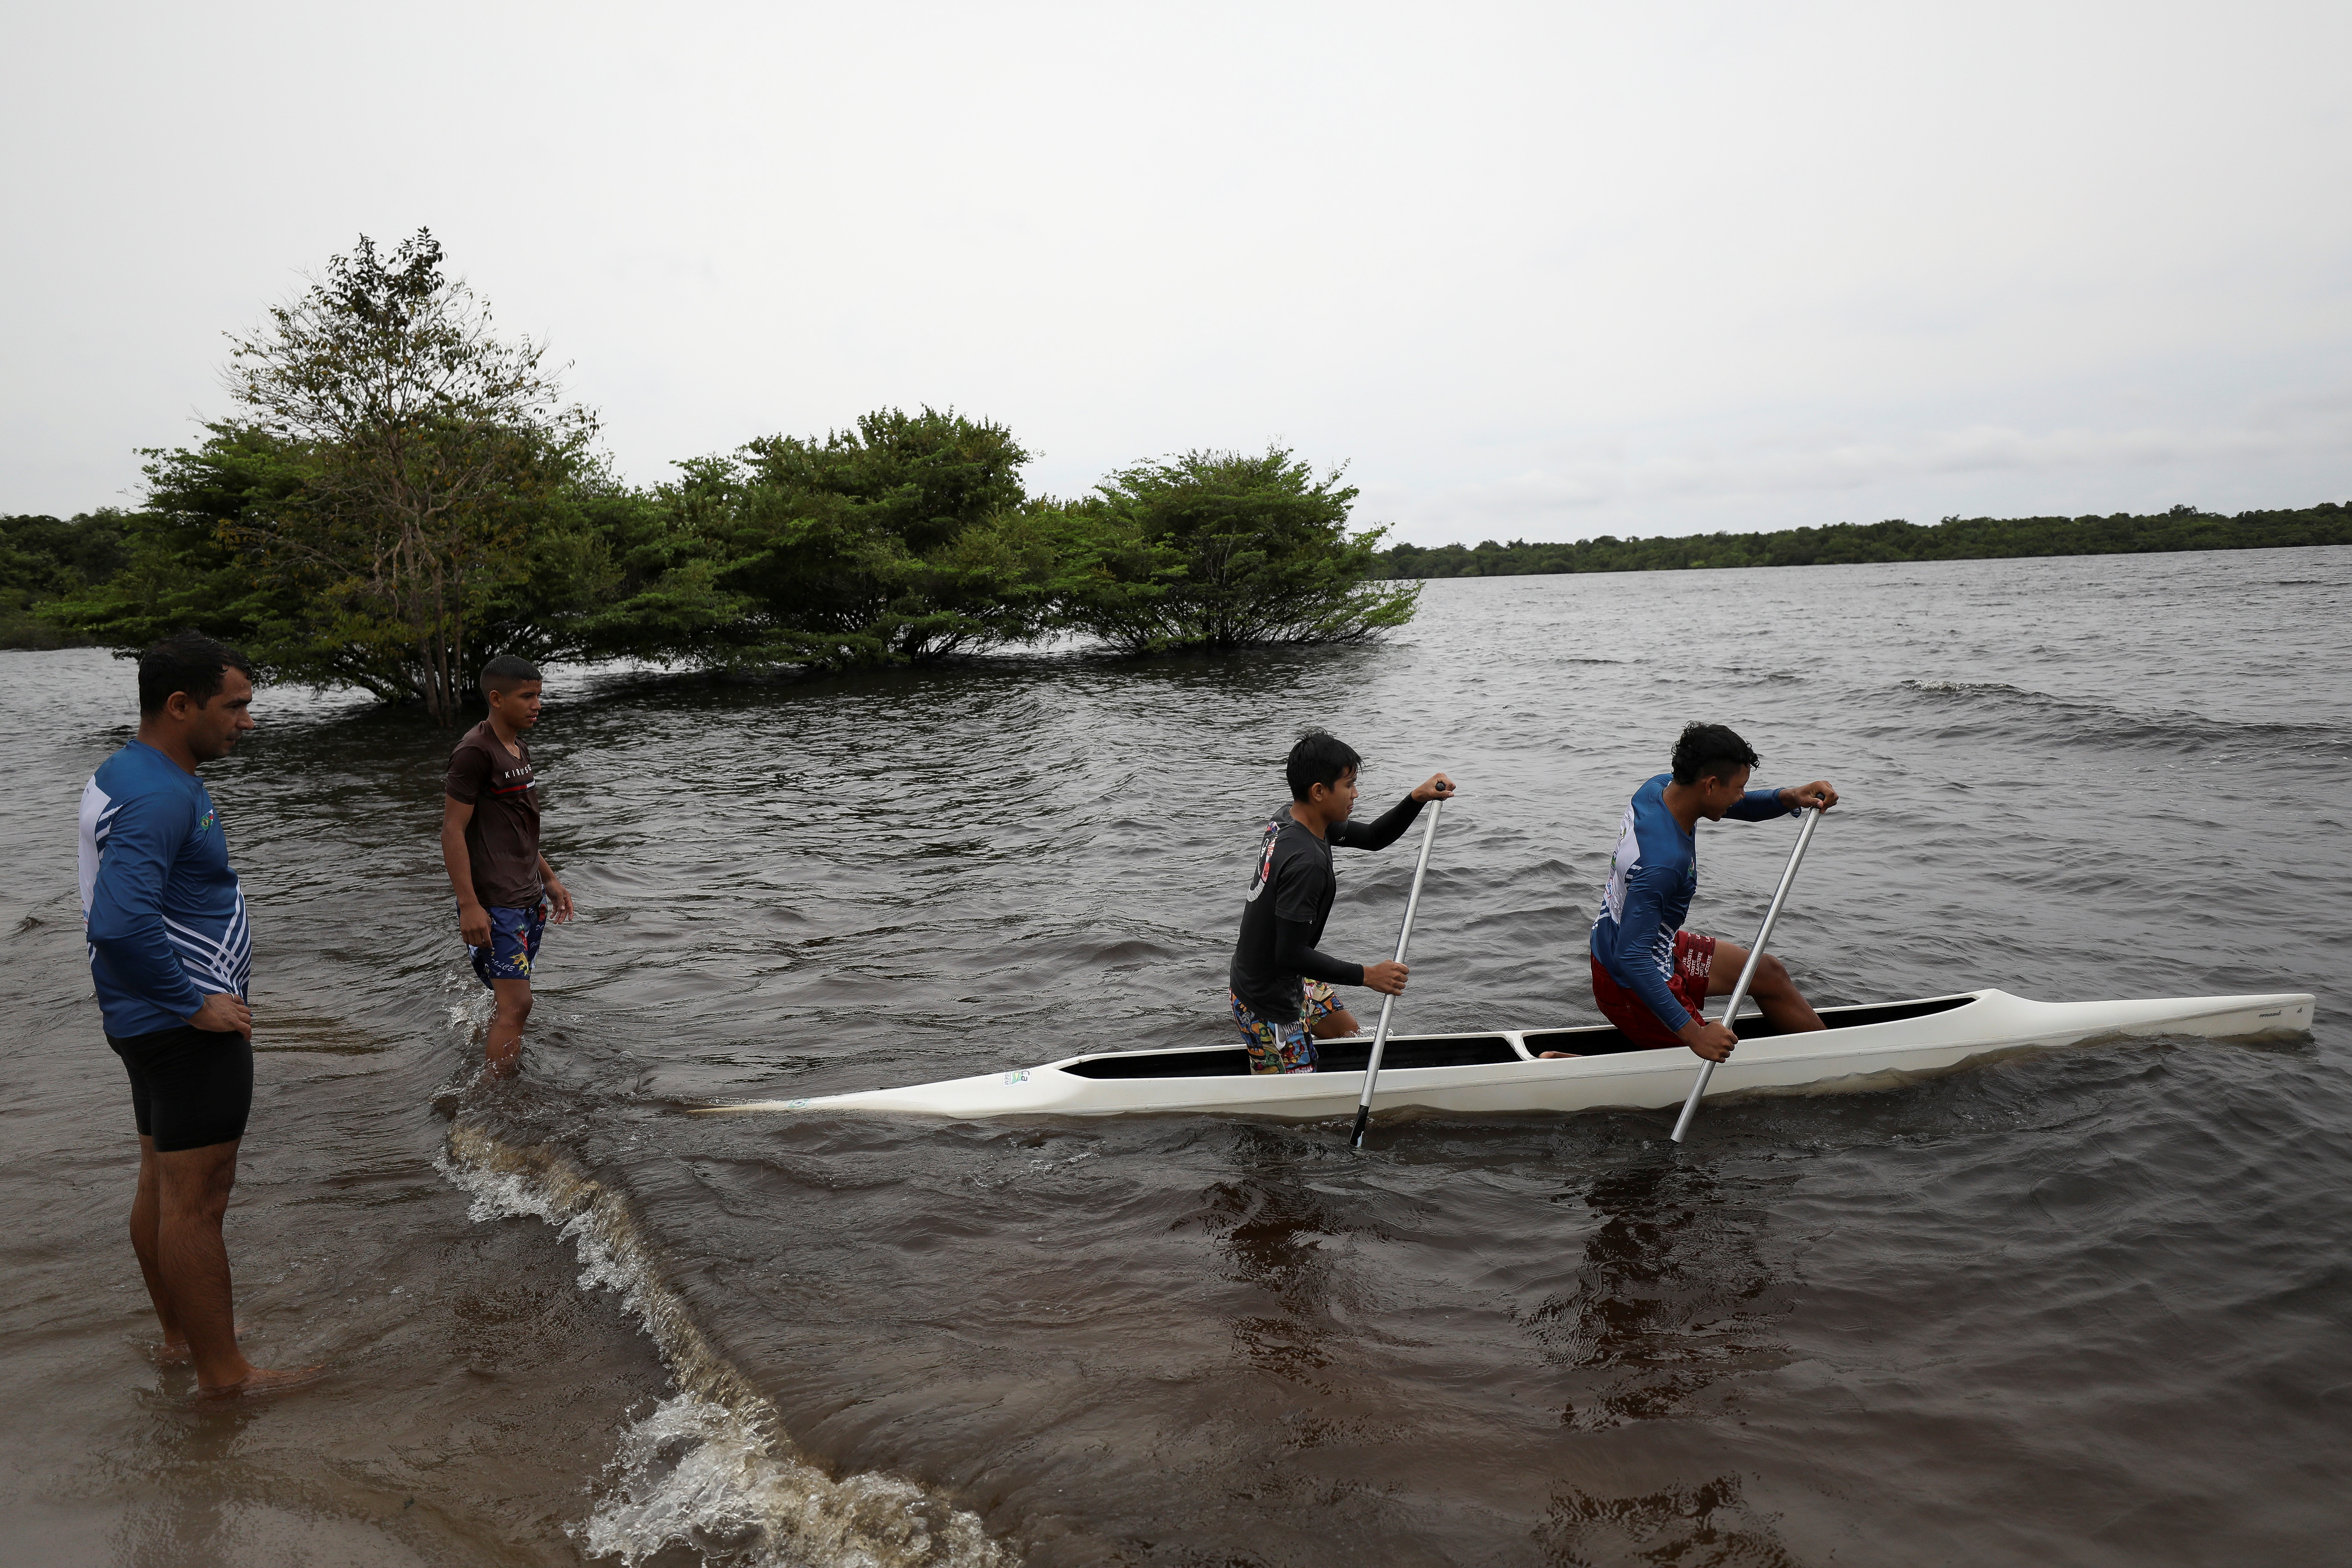 Indigenous sports programme seeks Brazil’s next canoeing sports star in Amazon